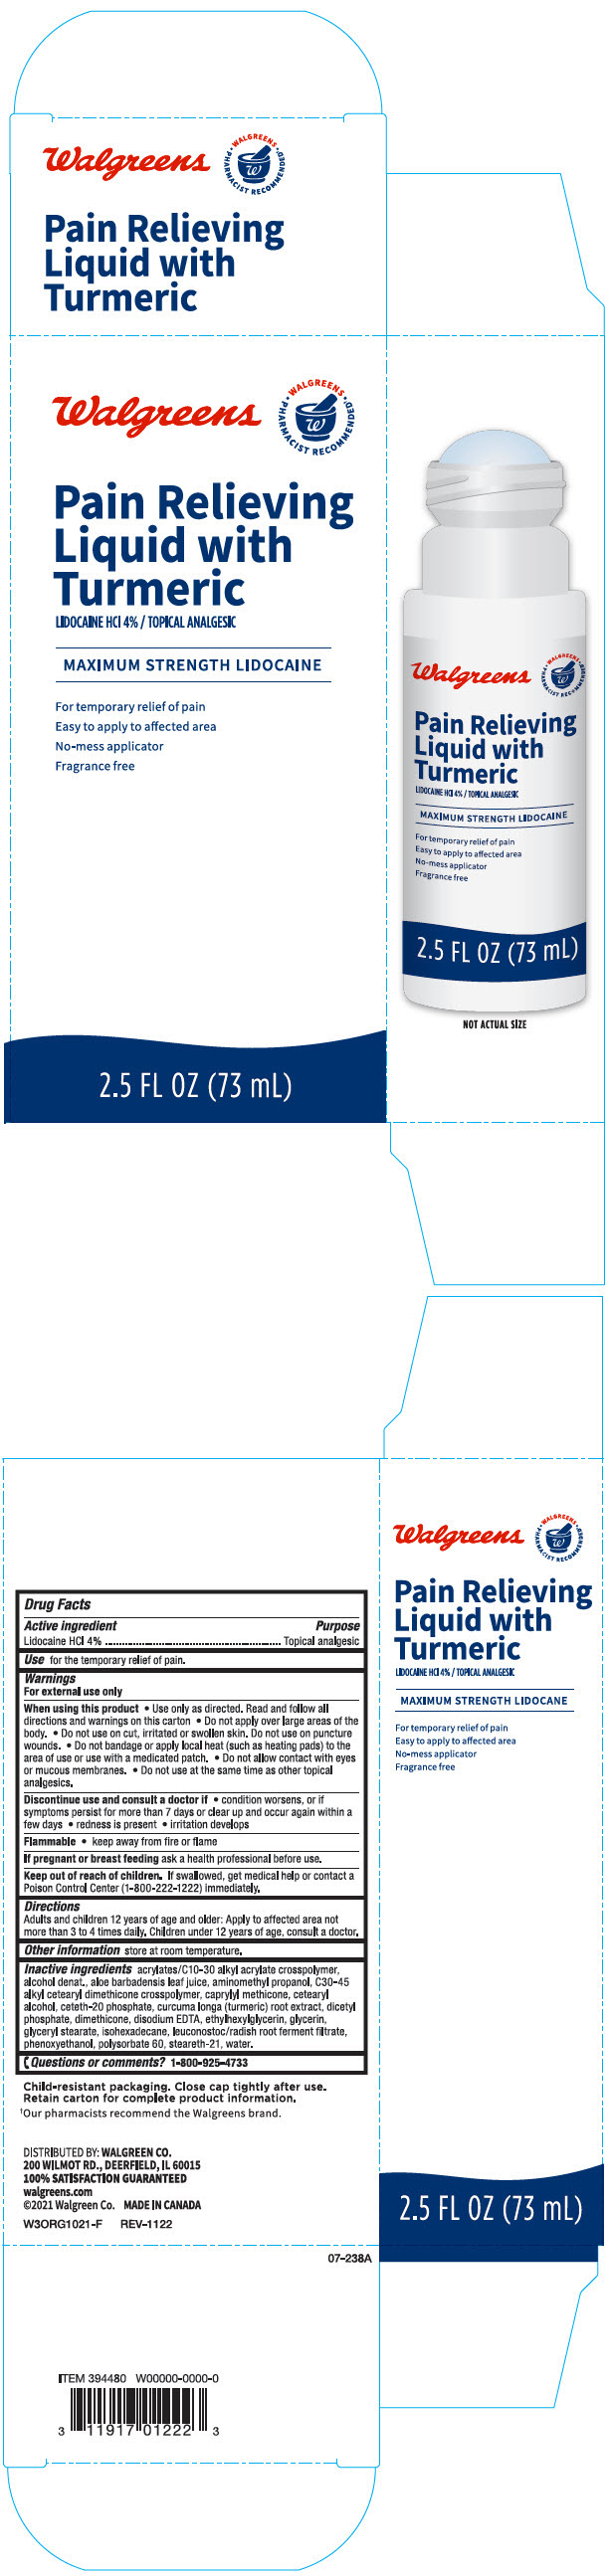 PRINCIPAL DISPLAY PANEL - 73 mL Bottle Carton